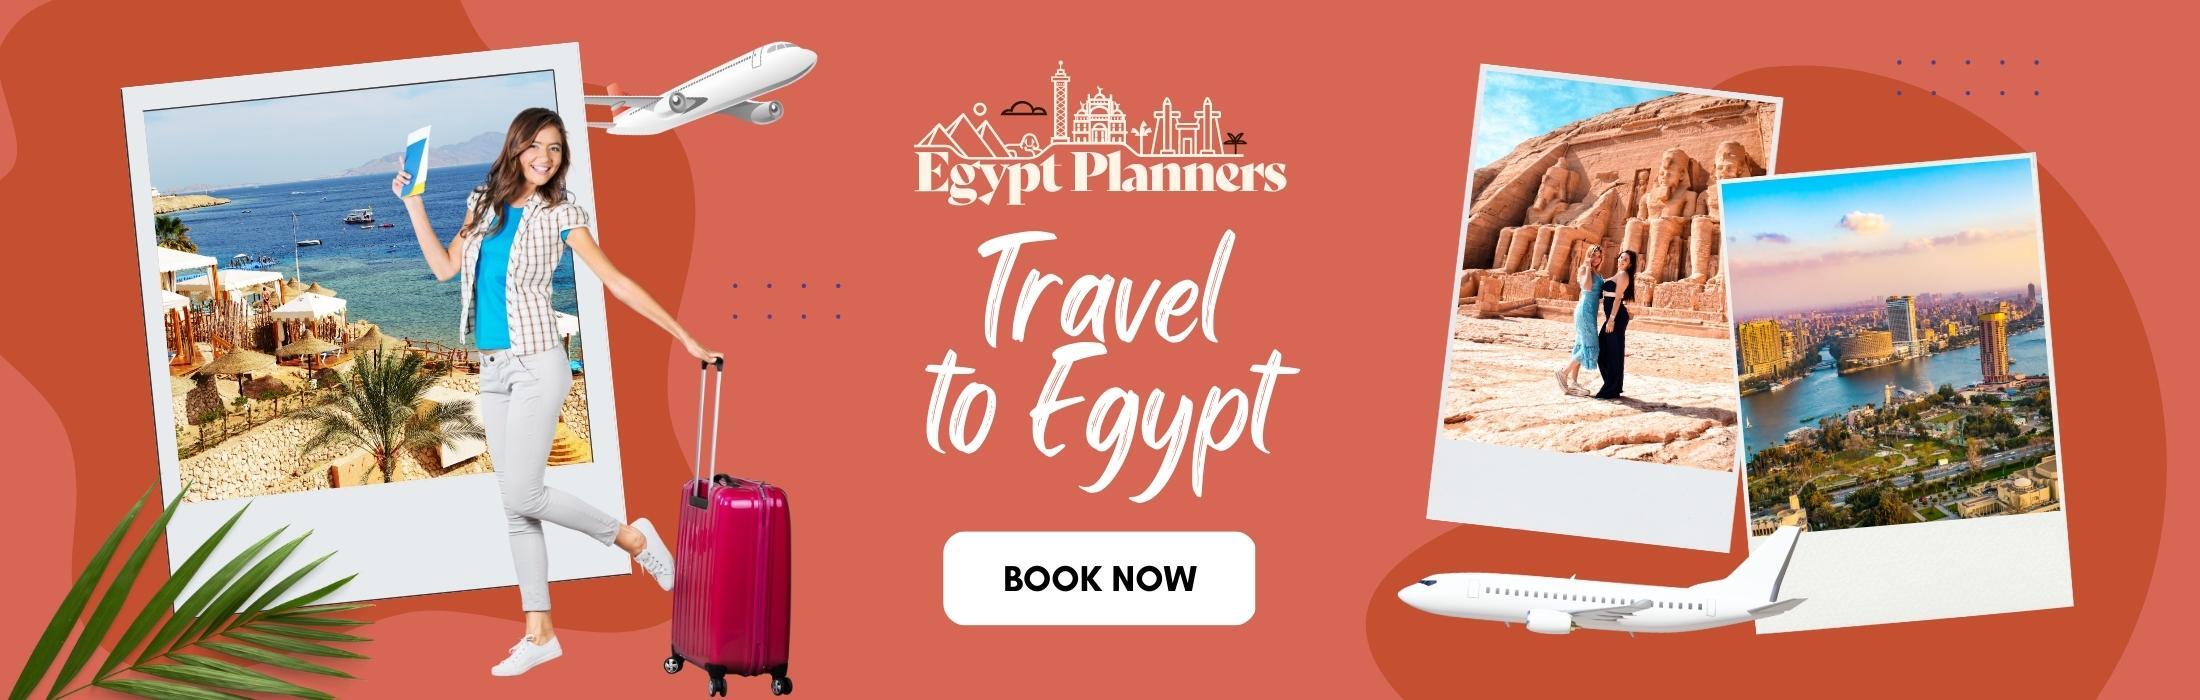 travel documents for egypt